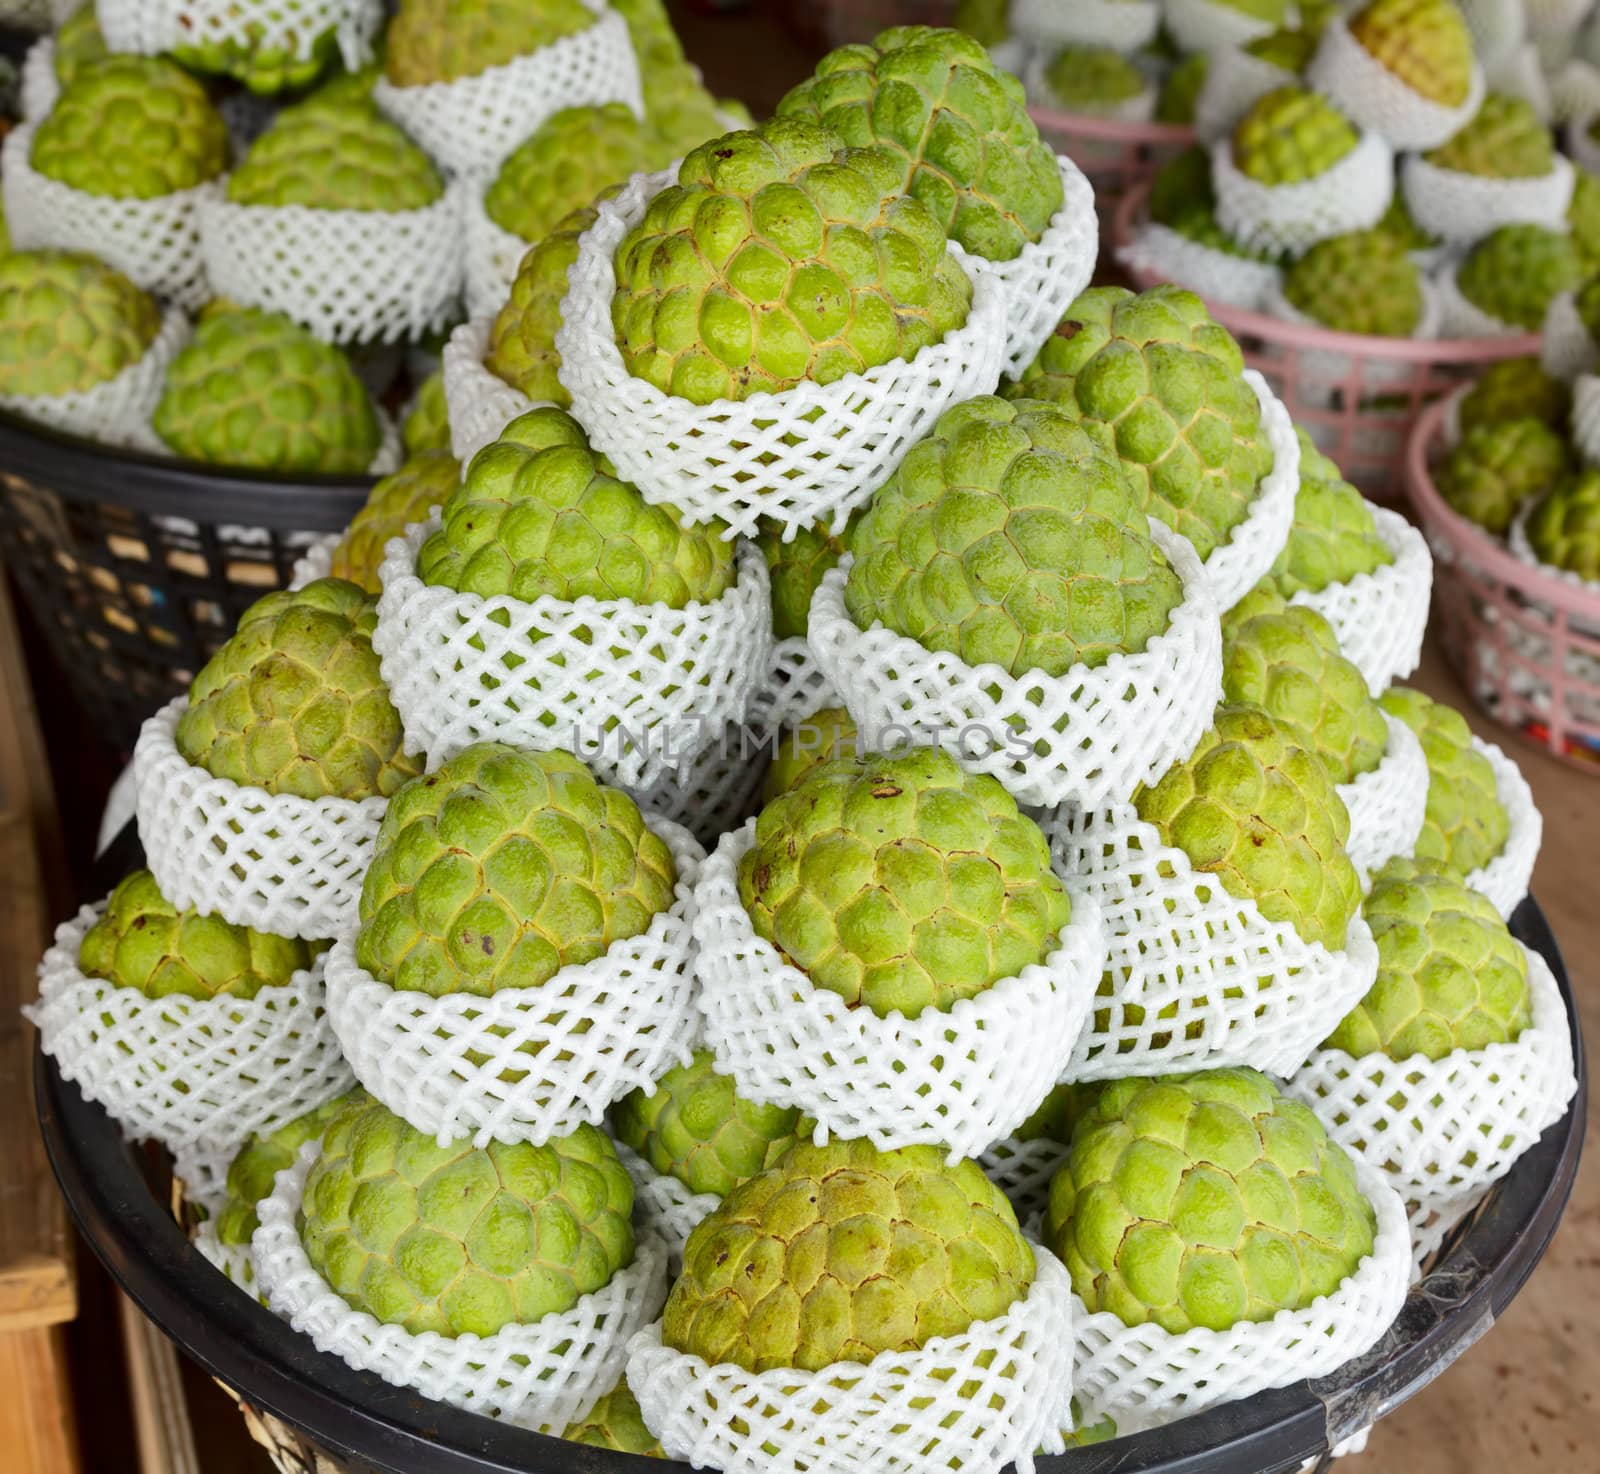 Freshly harvested Custard apples or Buddha Head Fruits at a market in Taiwan